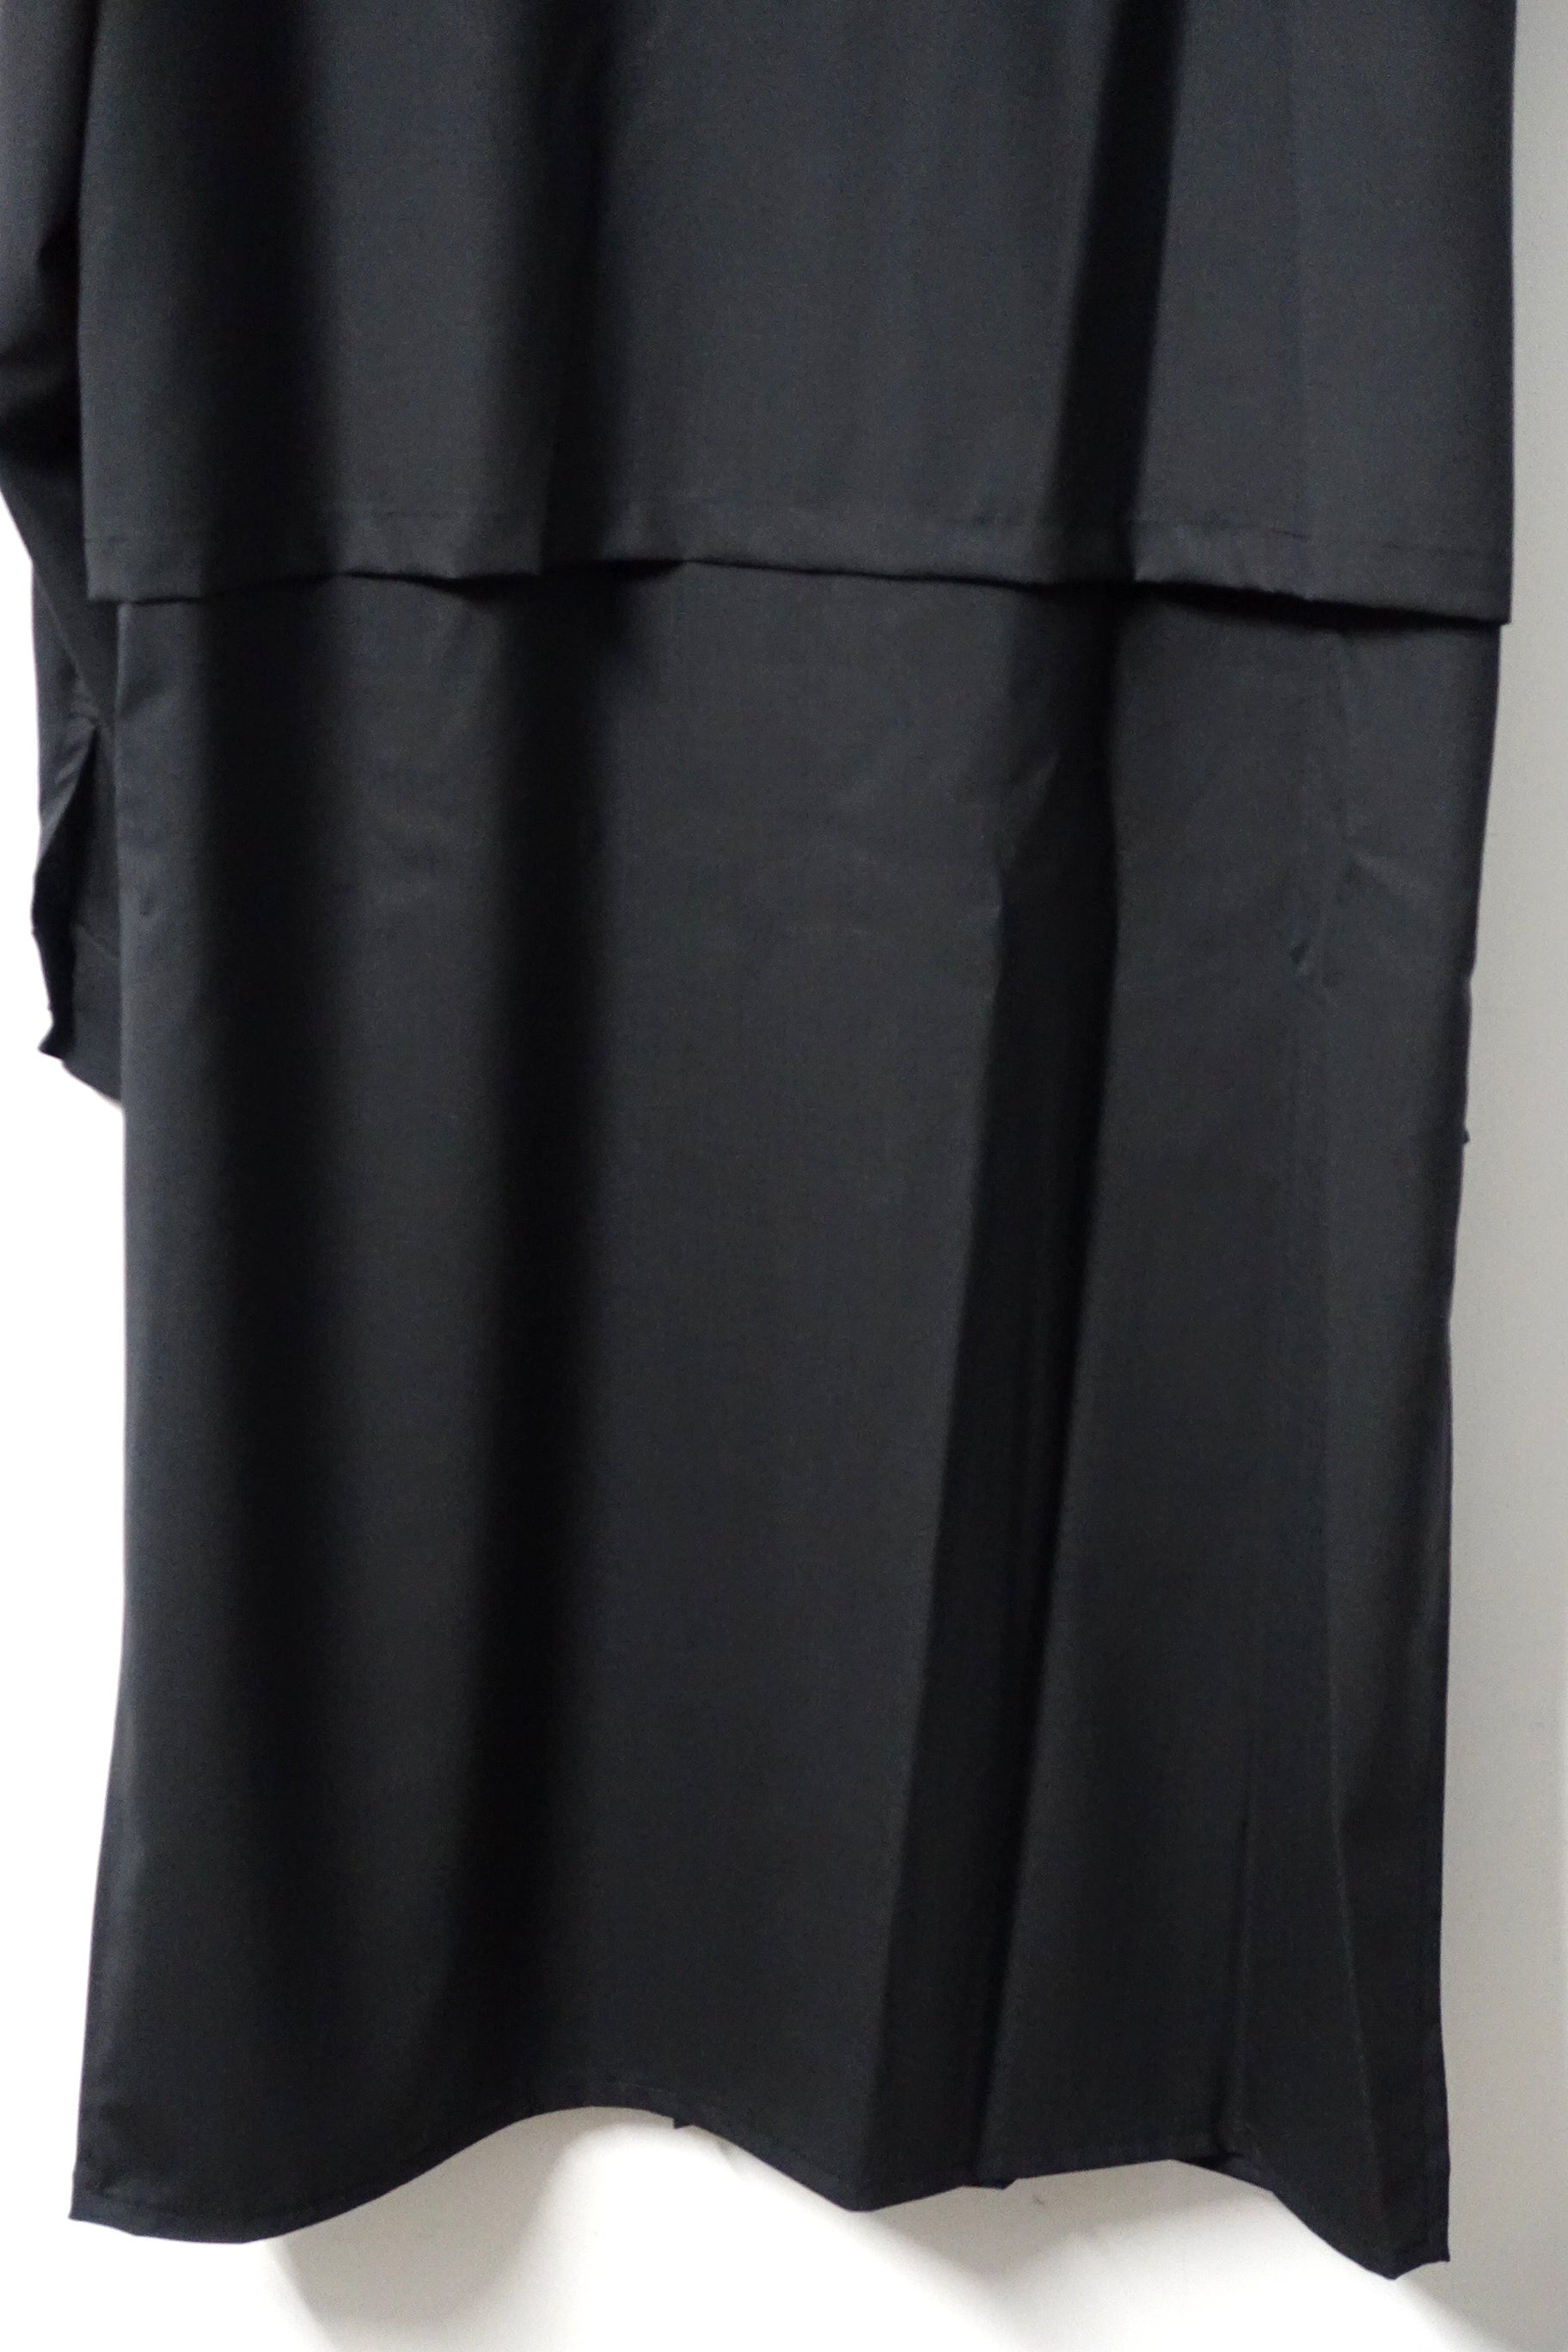 ETHOSENS(エトセンス)/Coat shirt/Black 通販 取り扱い-CONCRETE RIVER